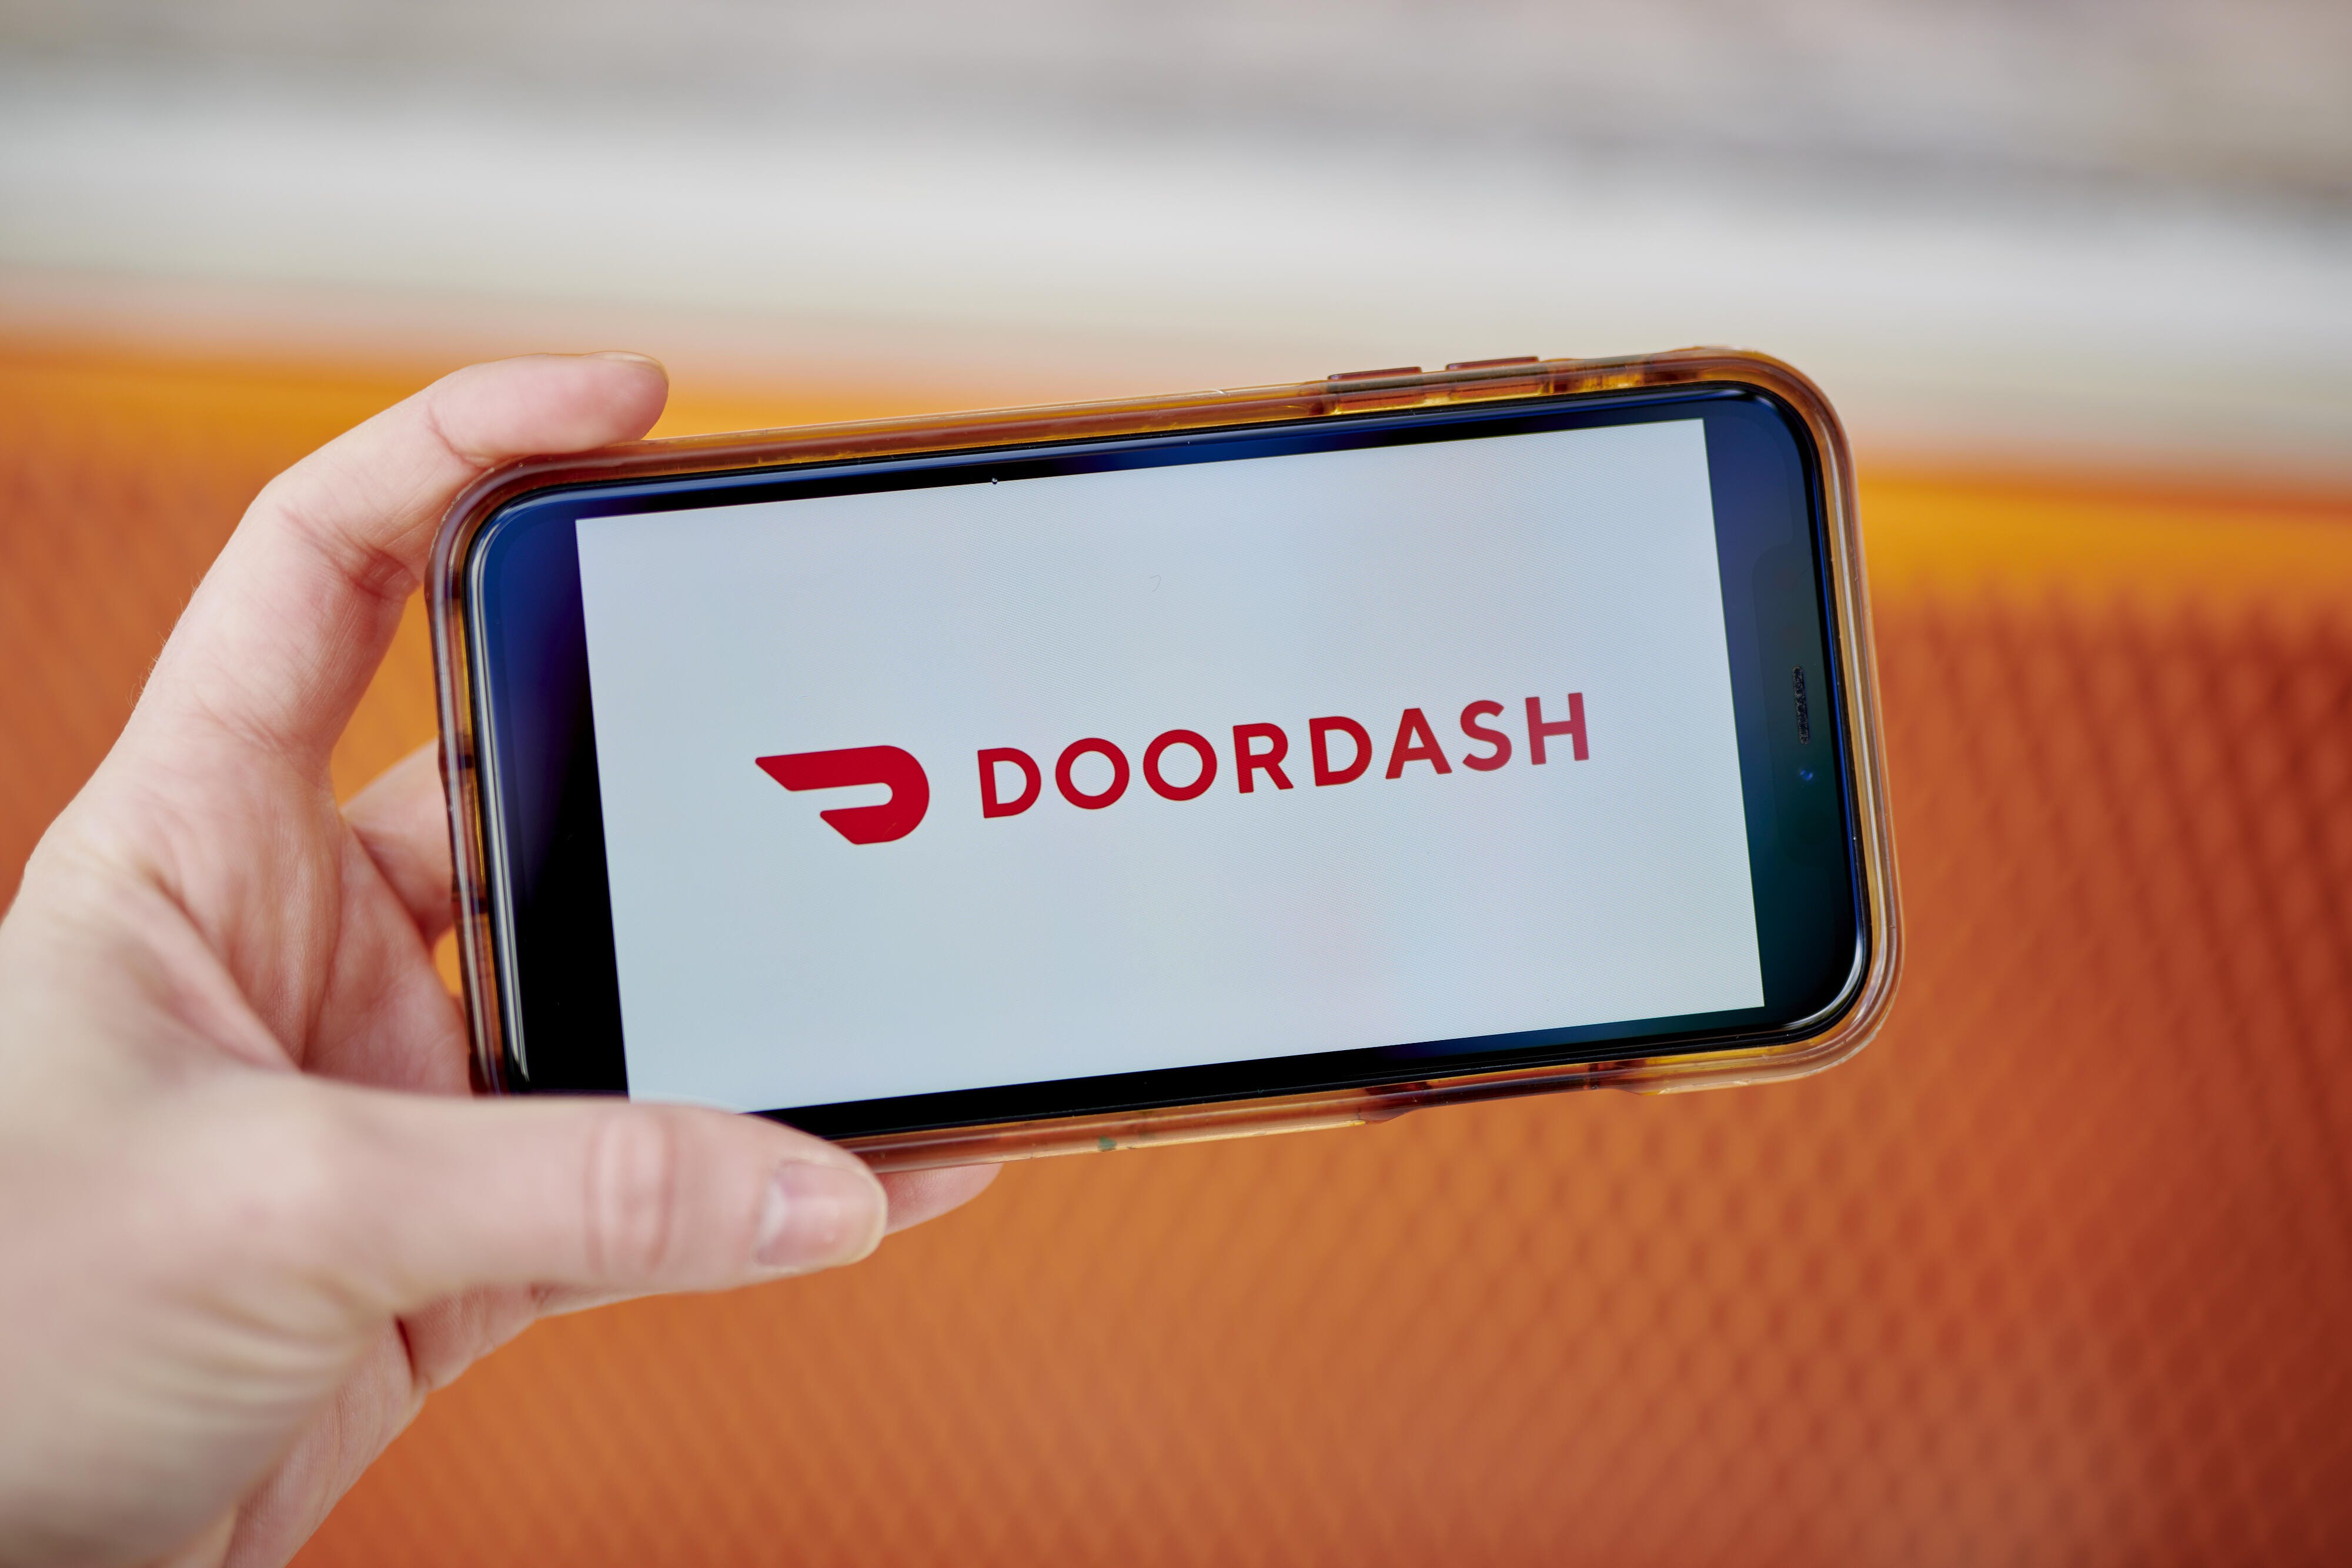 DoorDash delivers alcohol right to your door. Here’s how it works